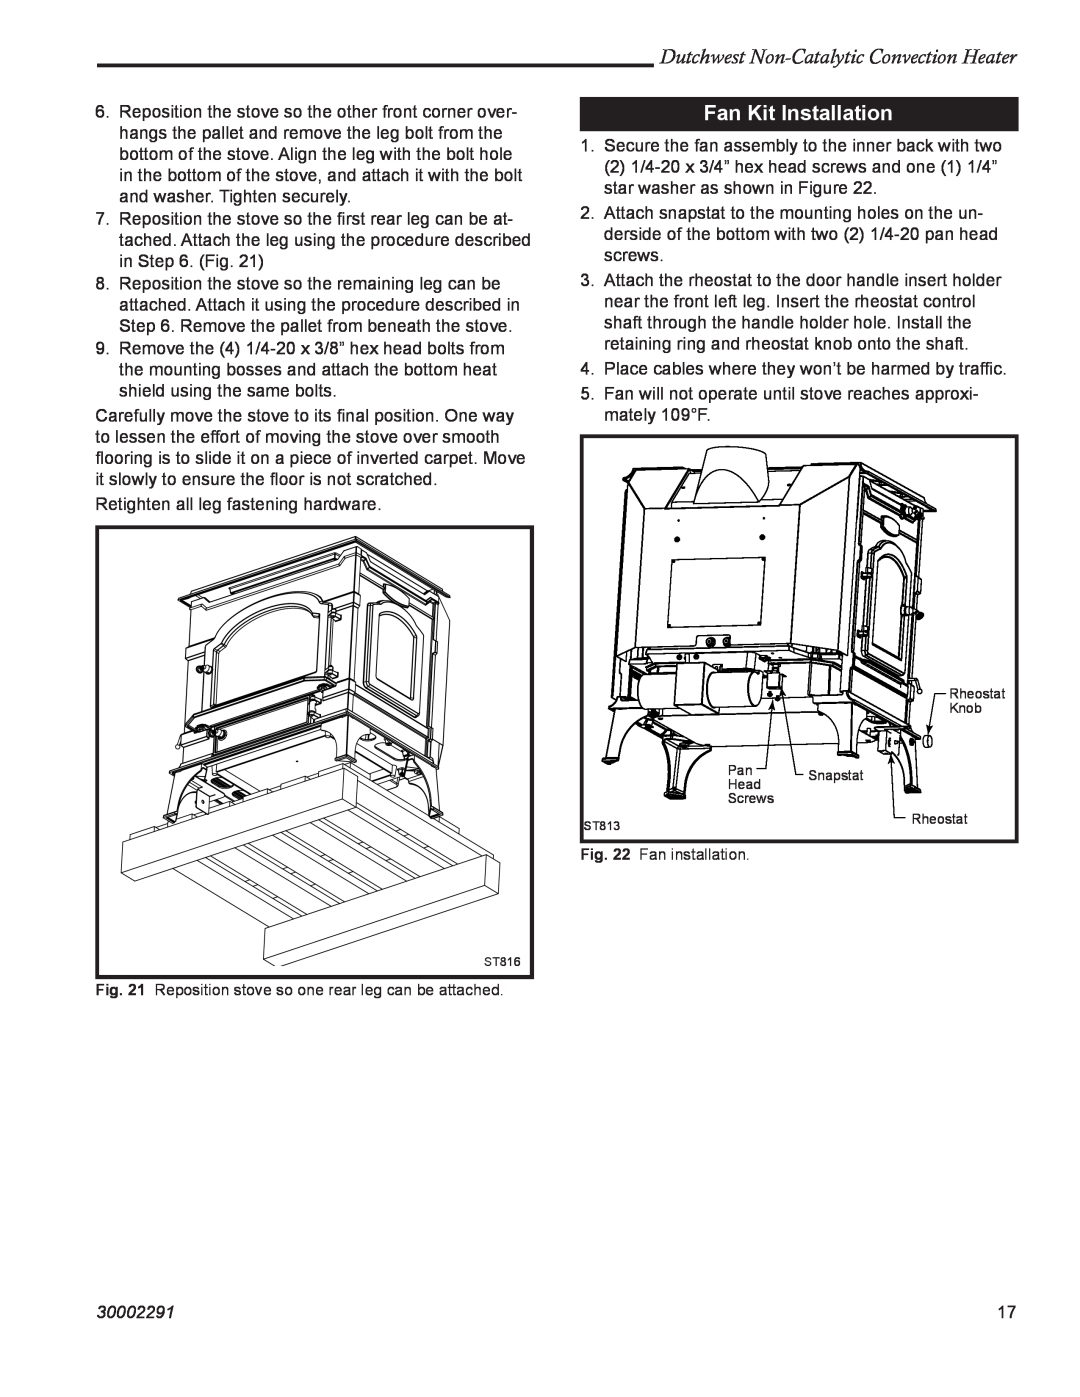 Vermont Casting 2479 manual Fan Kit Installation, Dutchwest Non-CatalyticConvection Heater, 30002291 